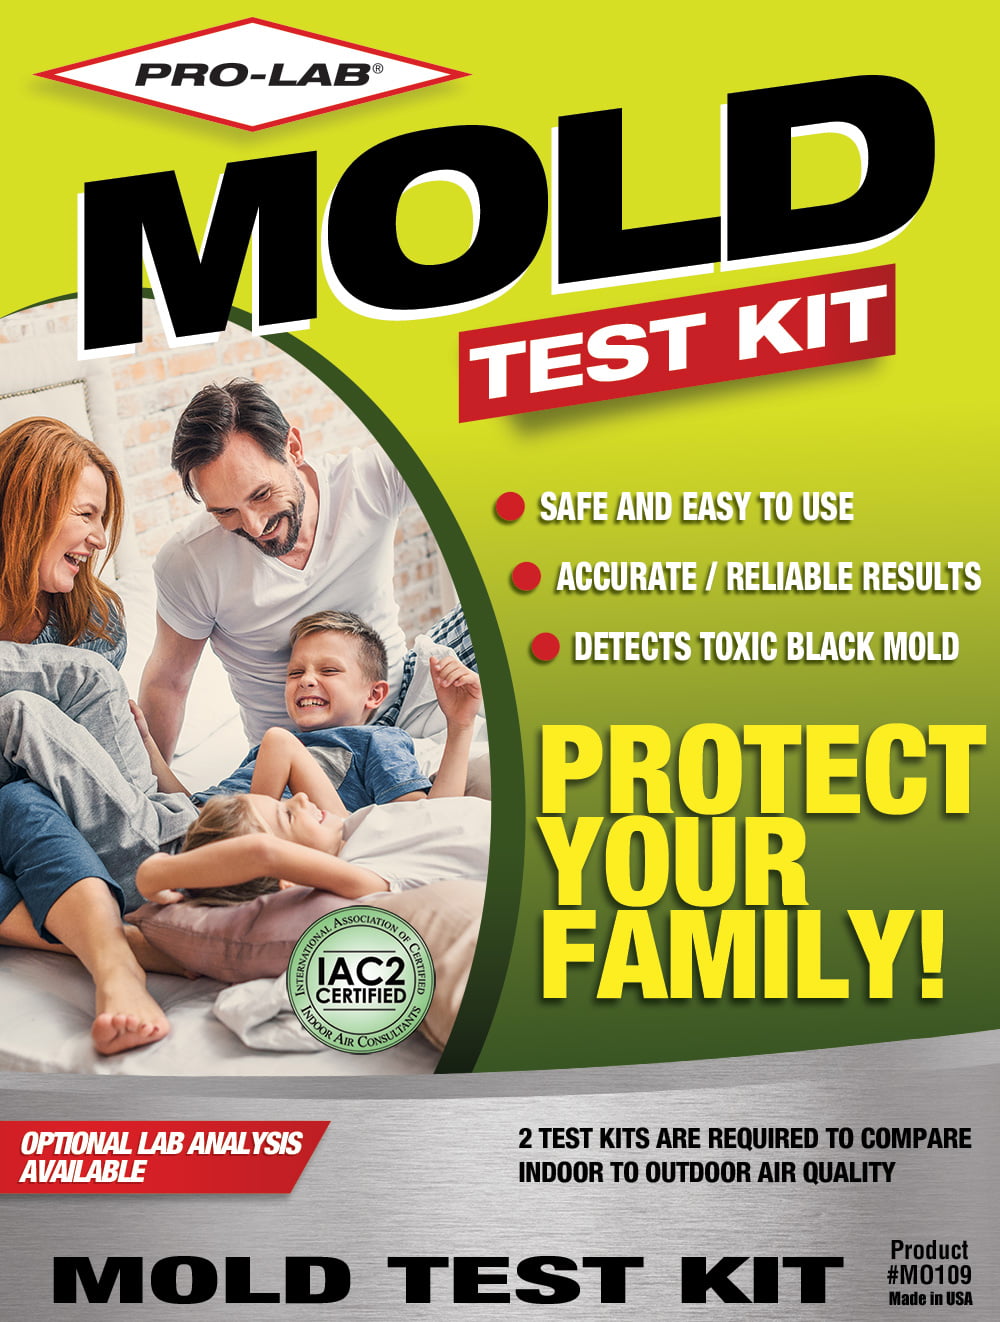 PRO-LAB Mold Test Kit